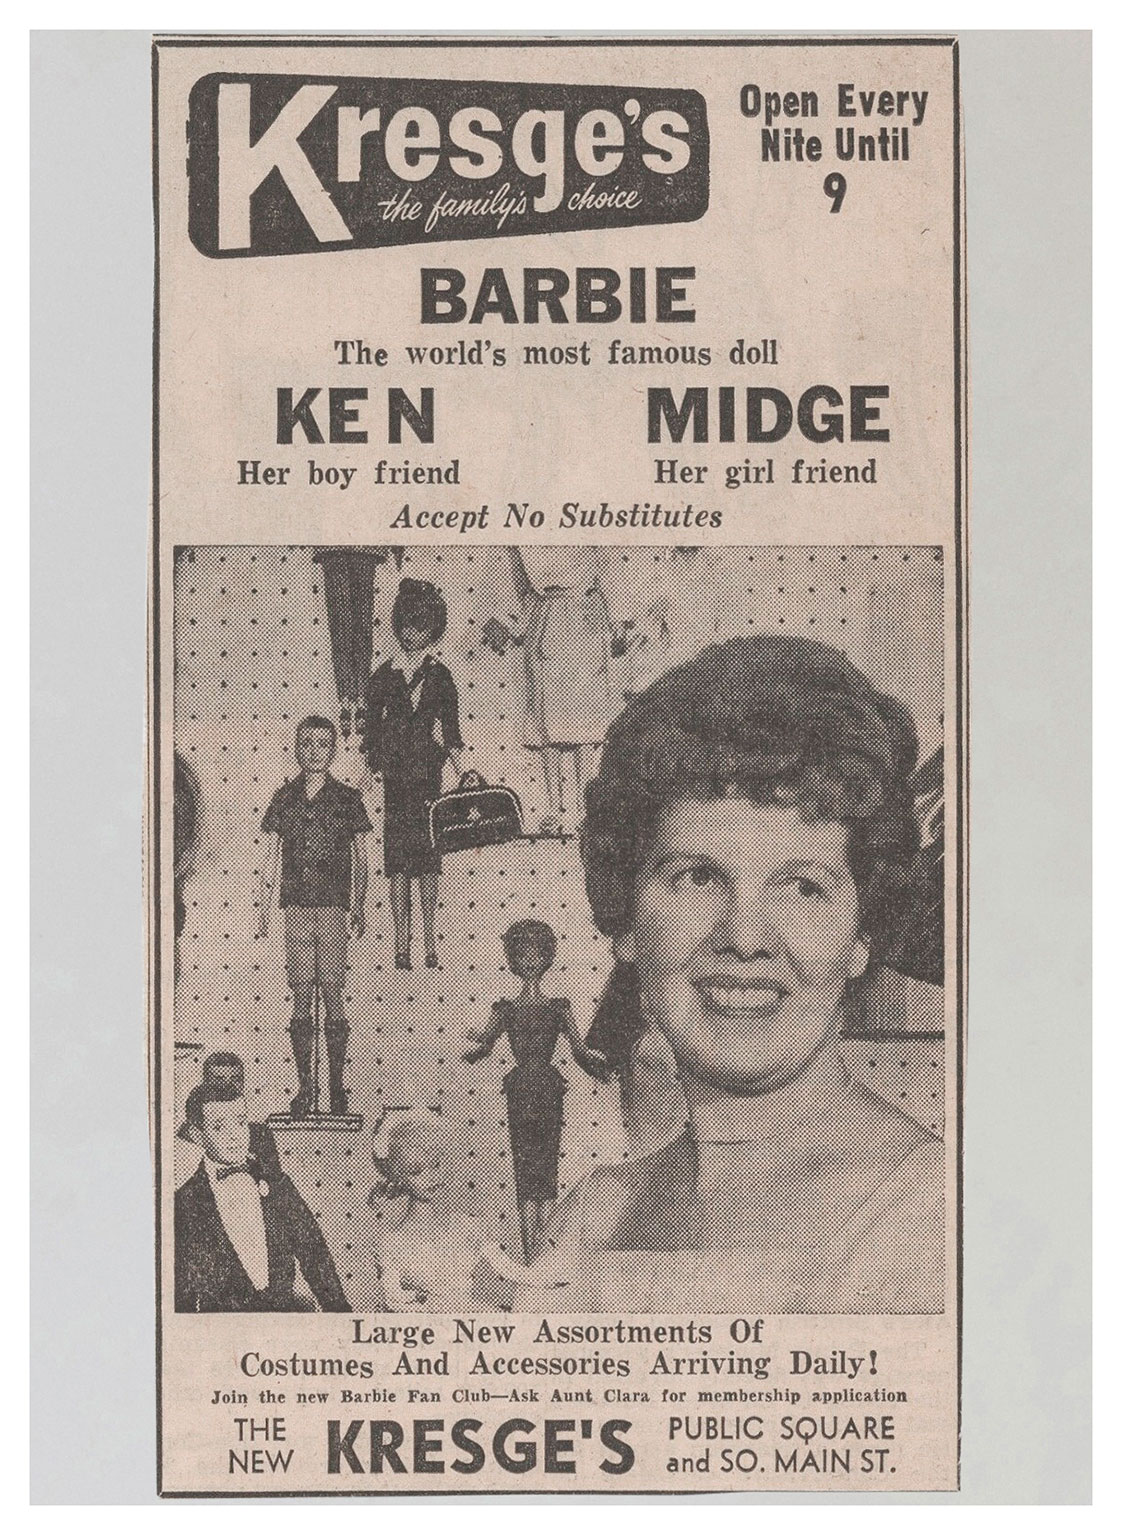 1963 Kresge's newspaper advertisement